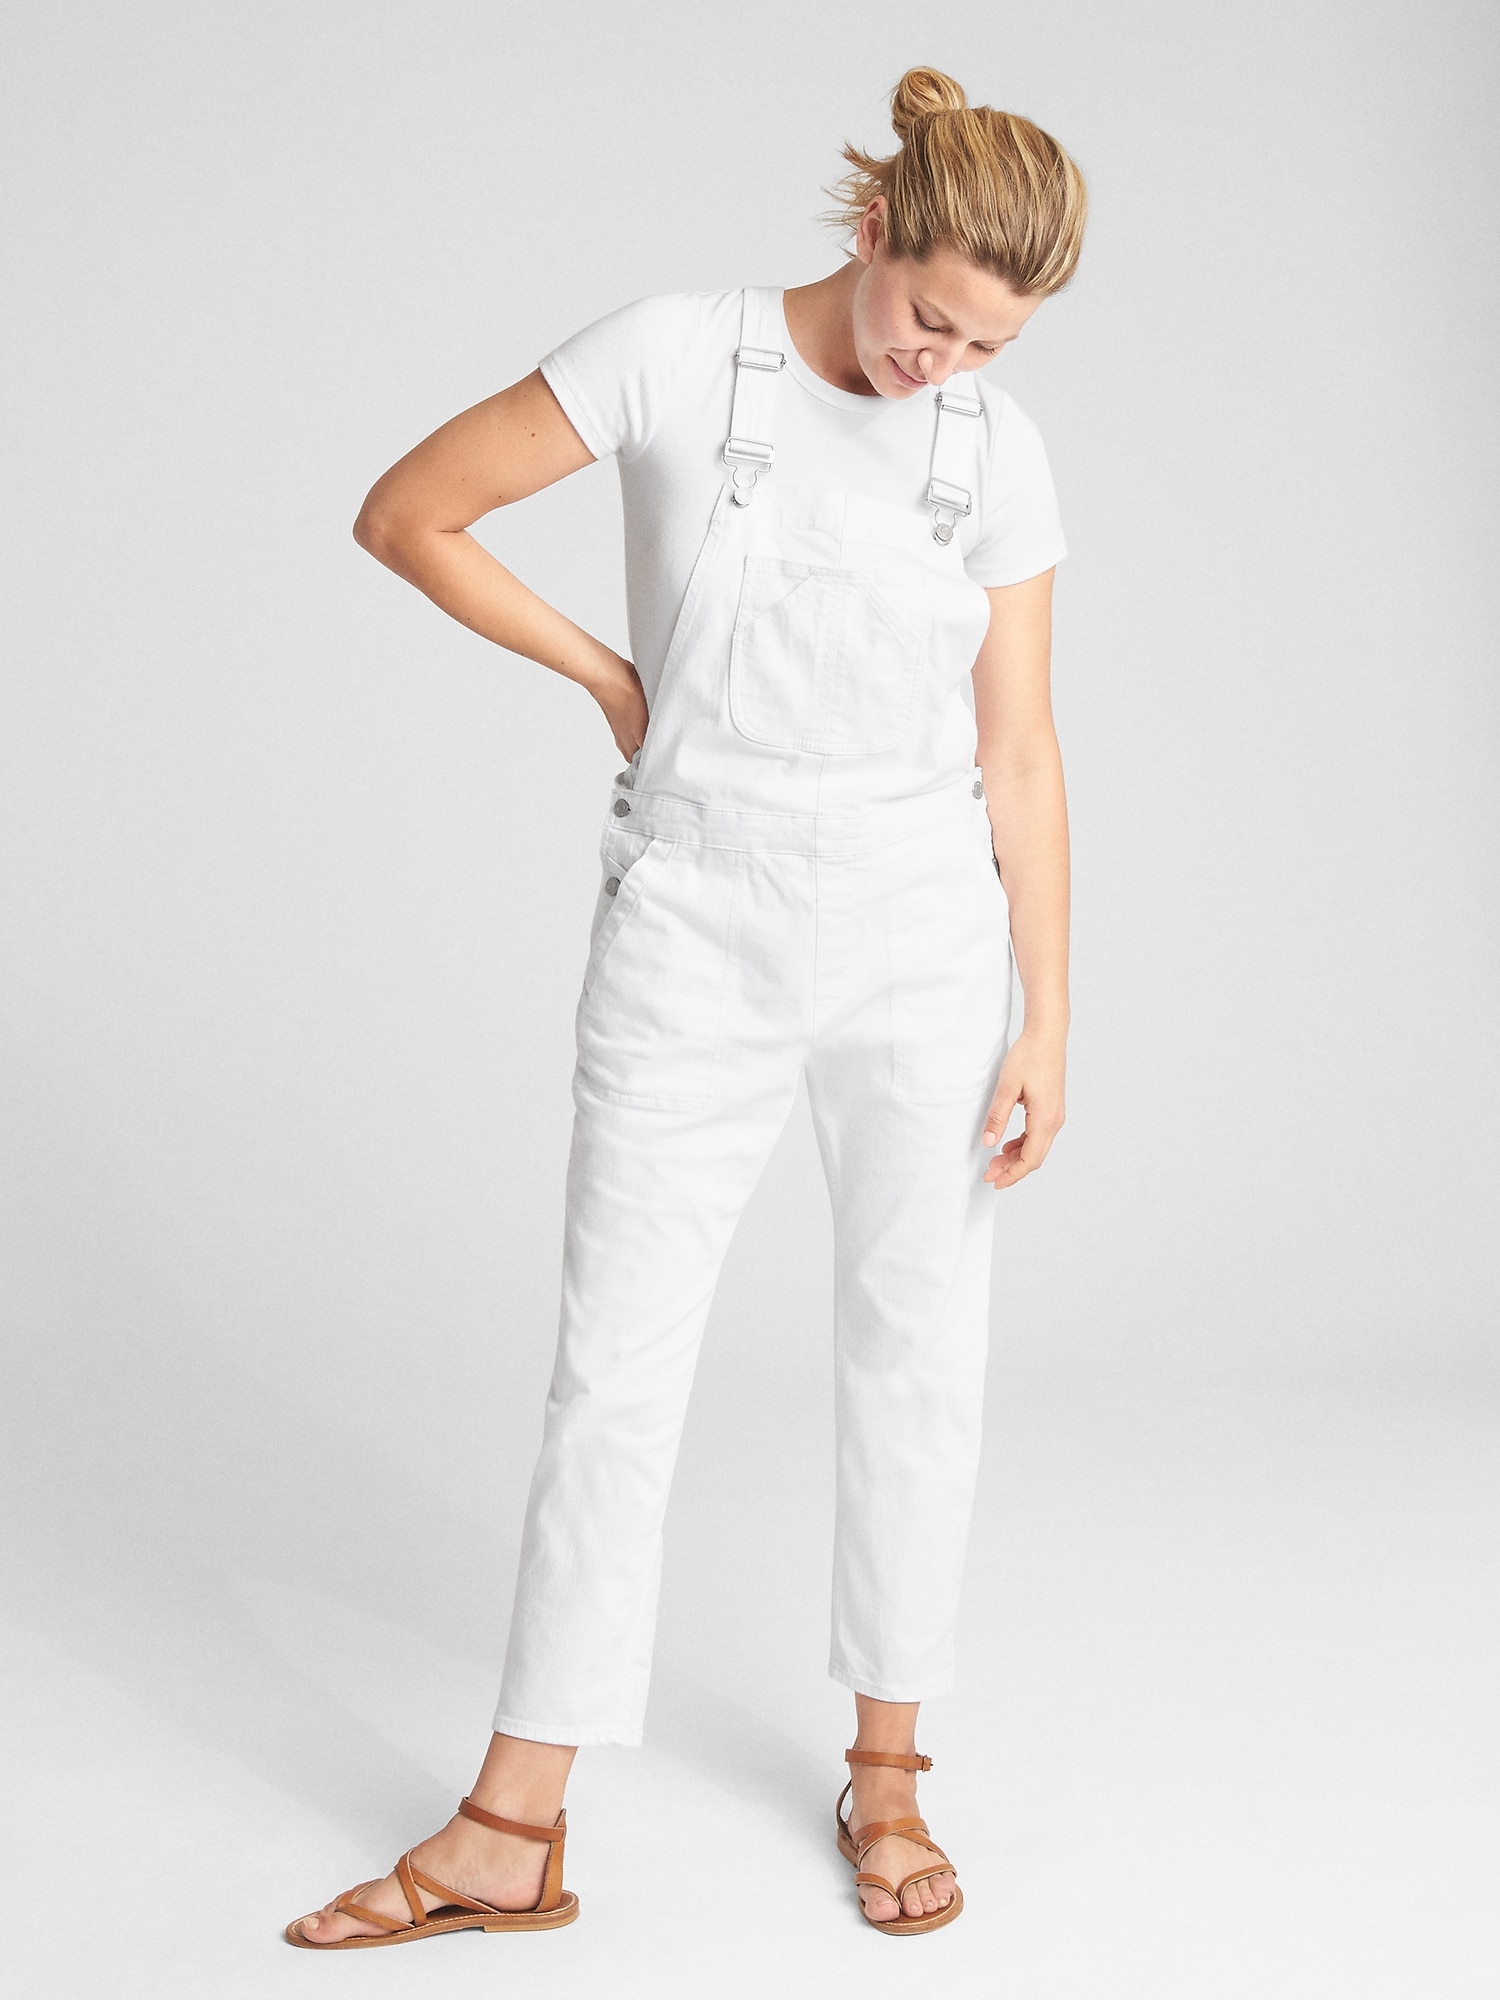 women's white overalls